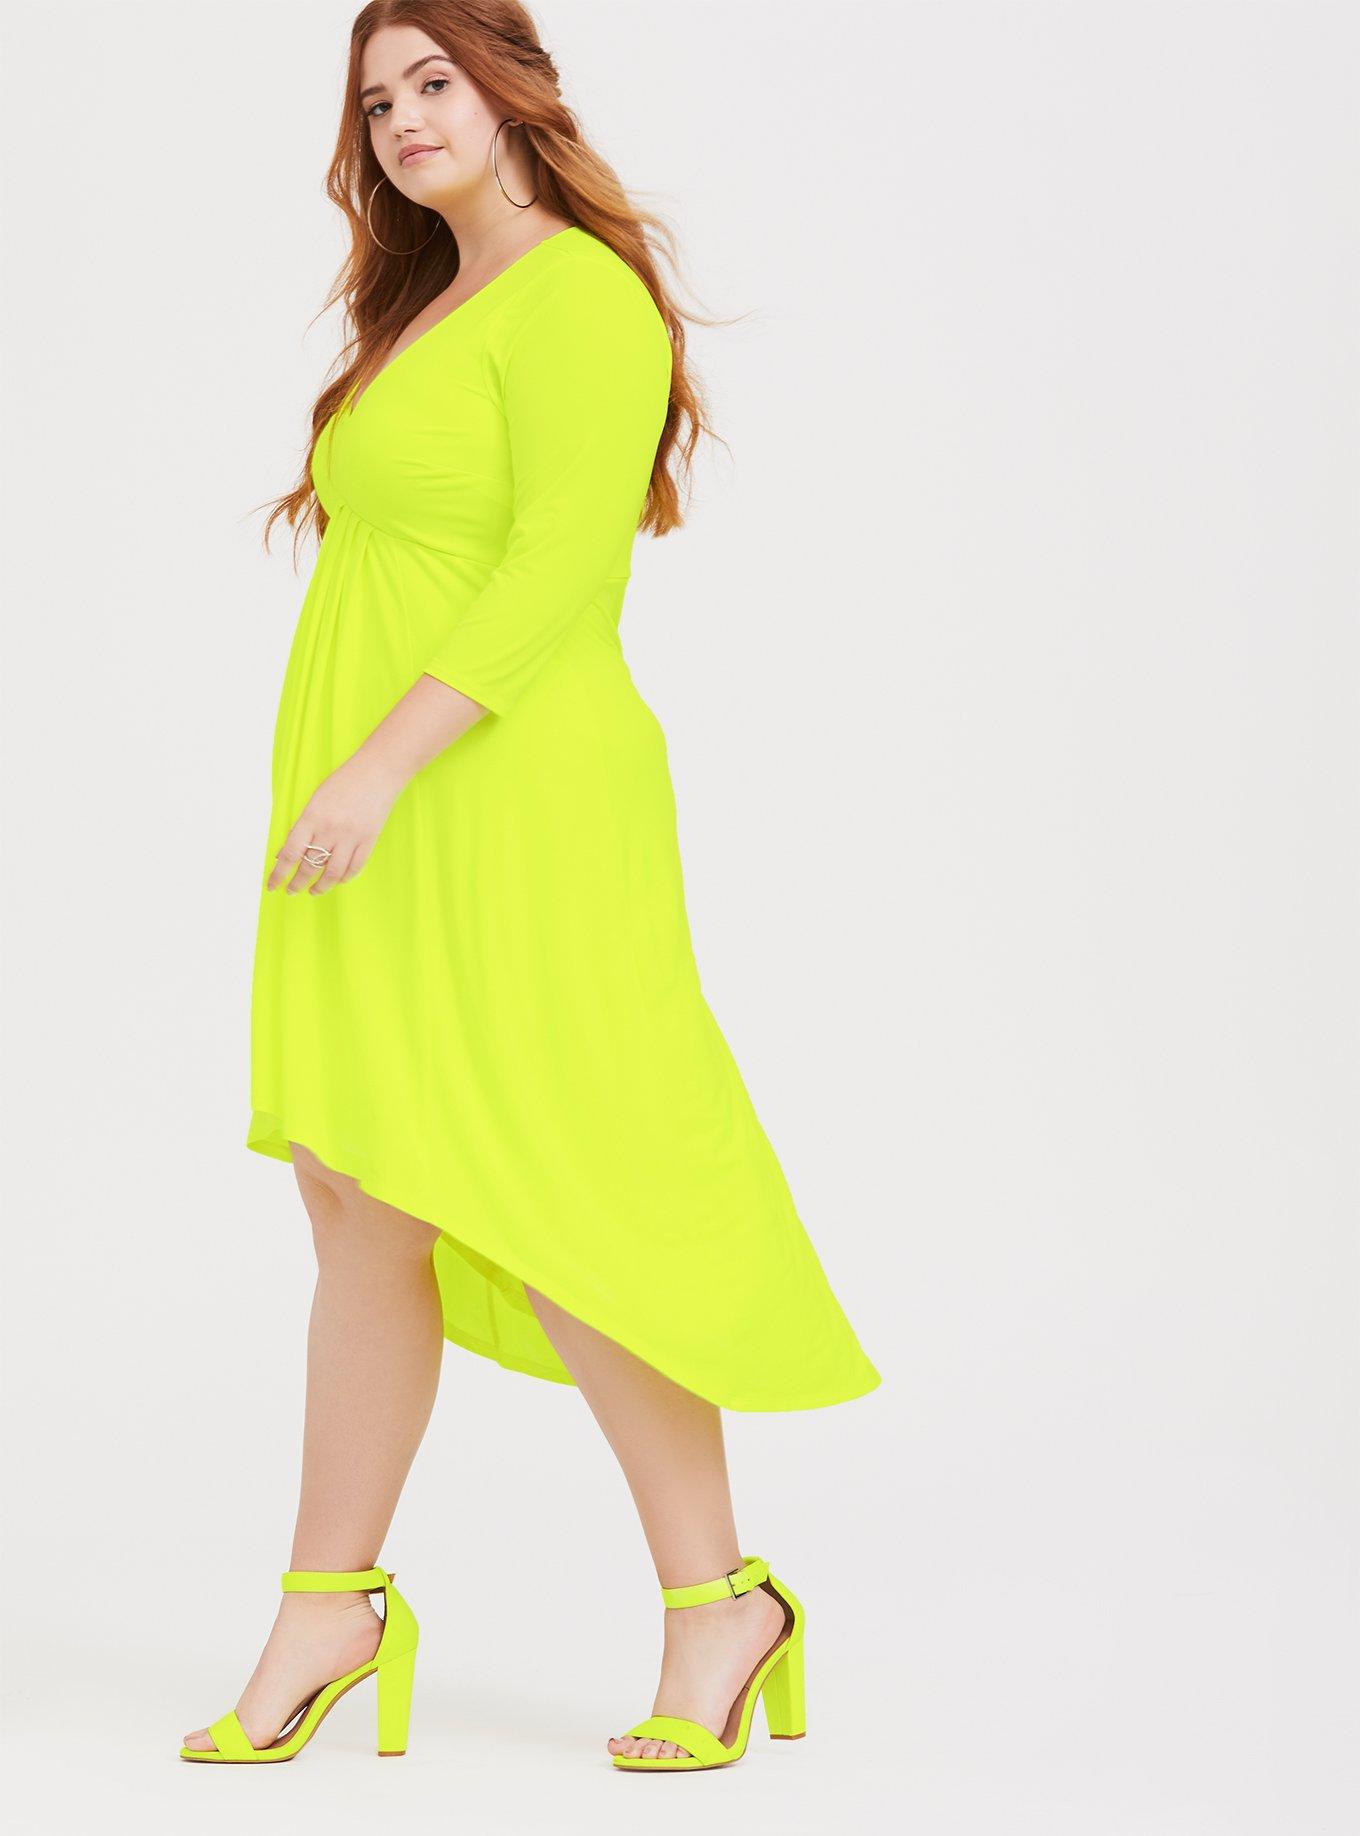 Plus Size - Neon Yellow Studio Knit Hi-Lo Dress - Torrid